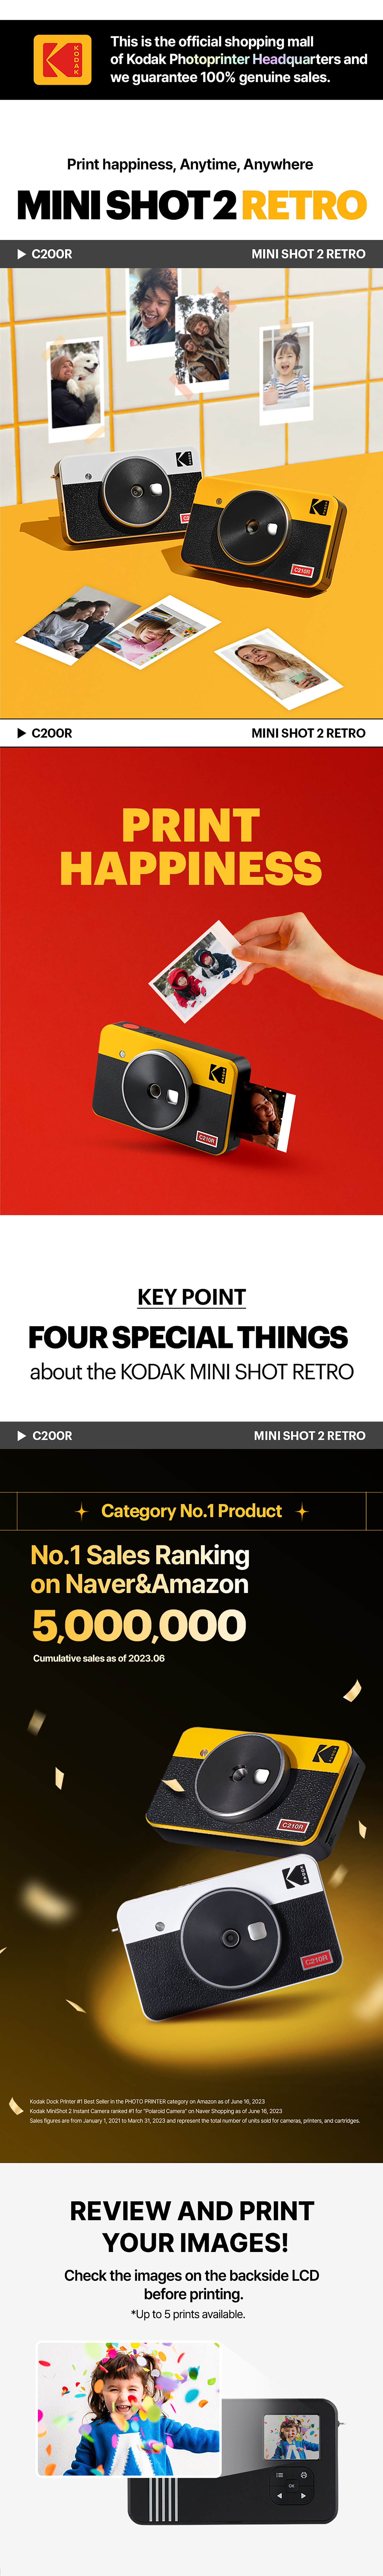 KODAK 4PASS Film Cartridge (2.1x3.4 inches) for KODAK Mini 2 Retro and Mini  Shot 2 Retro, 60 Sheets